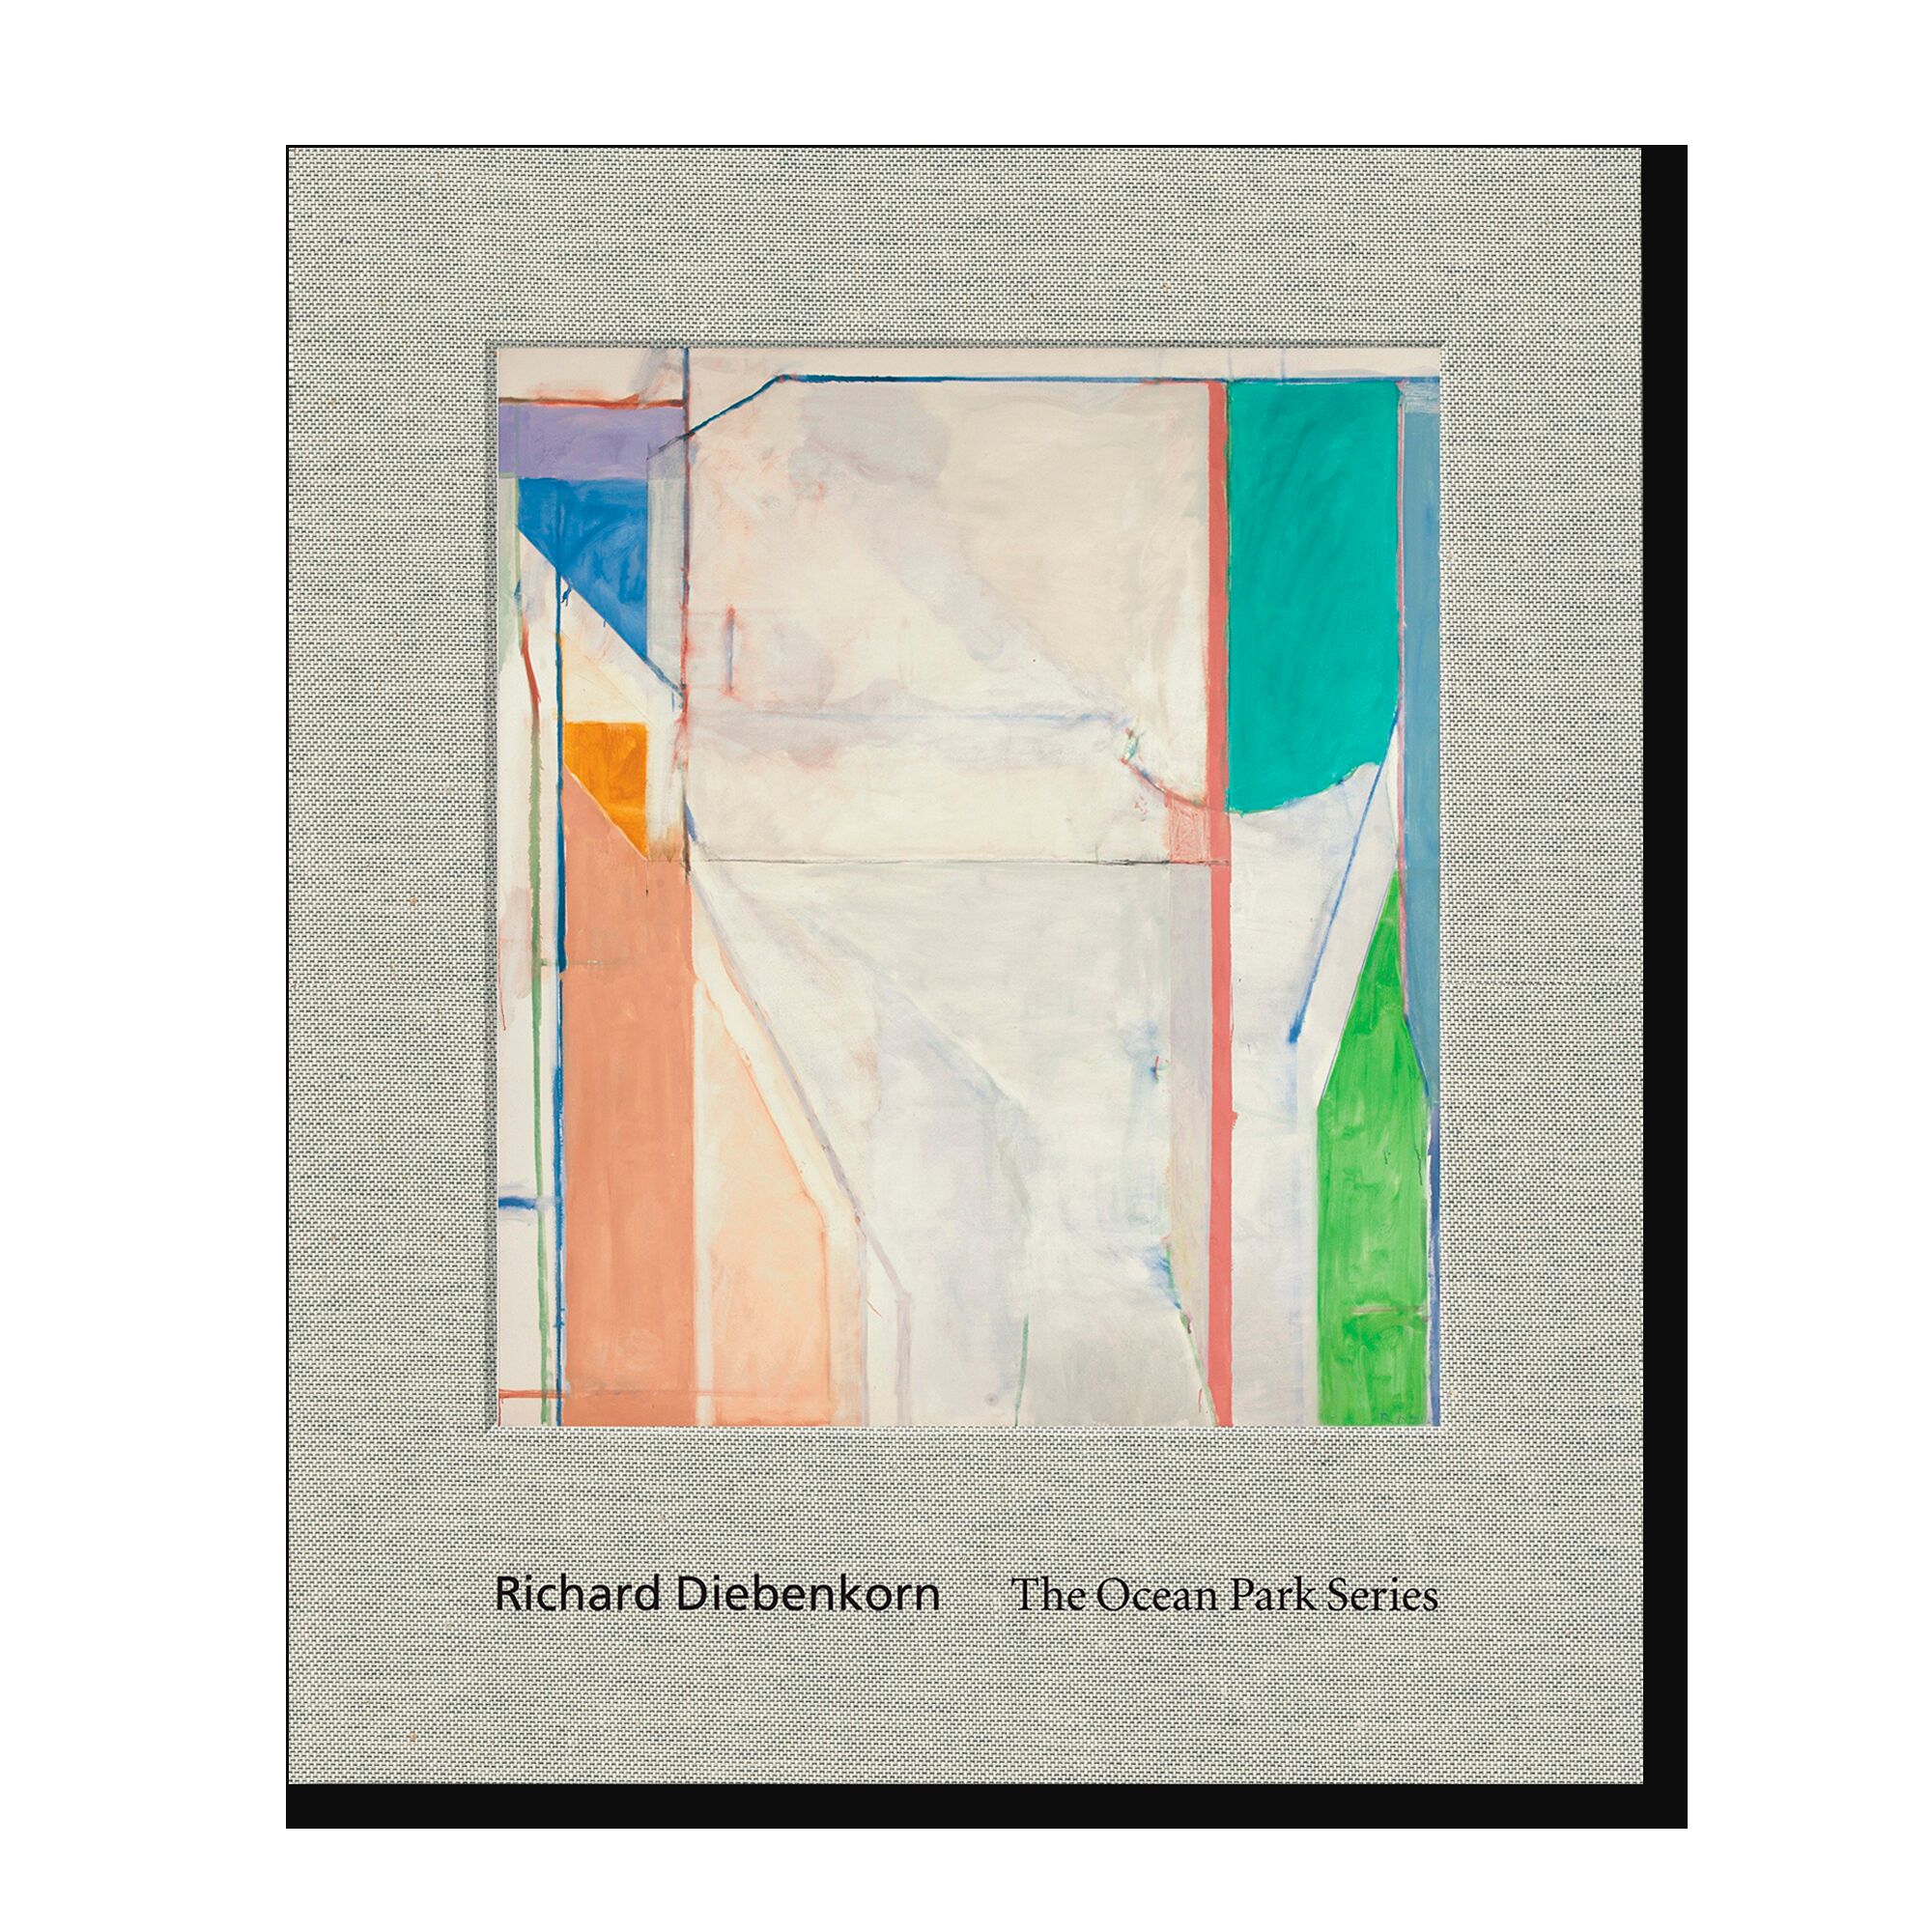 Richard Diebenkorn: The Ocean Park Series